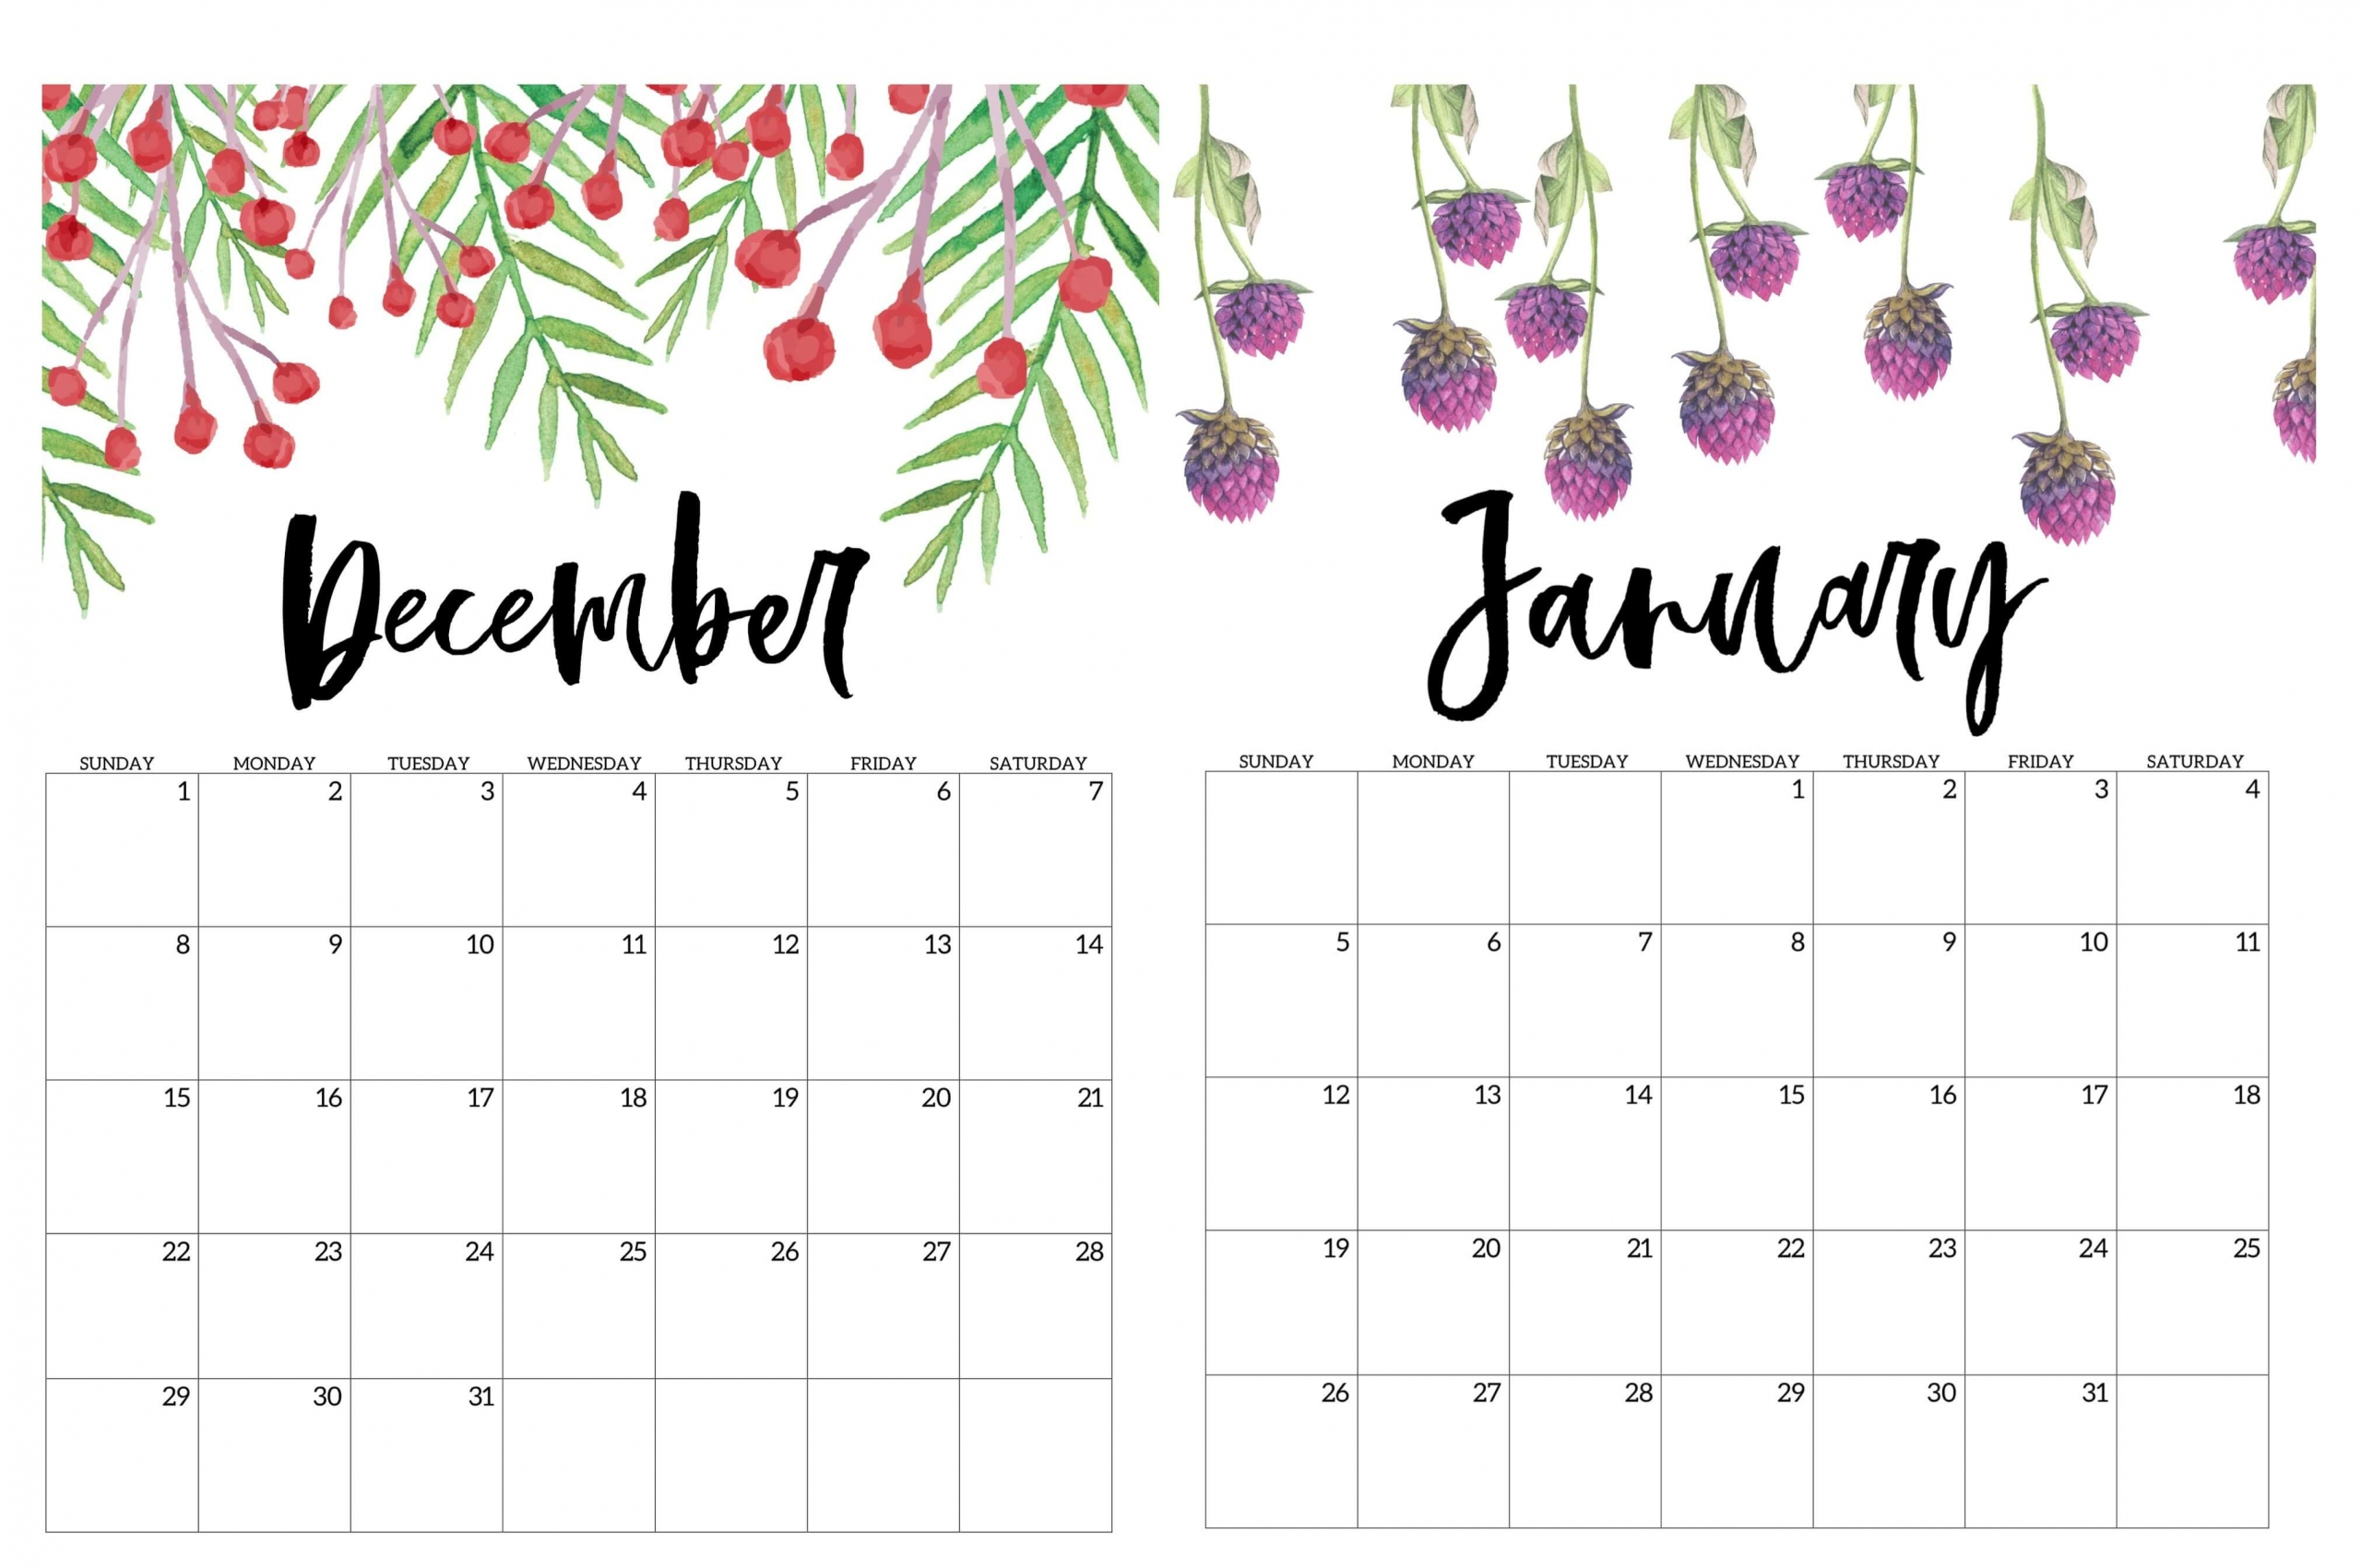 Free Download January 2020 Calendar Wallpapers Top January